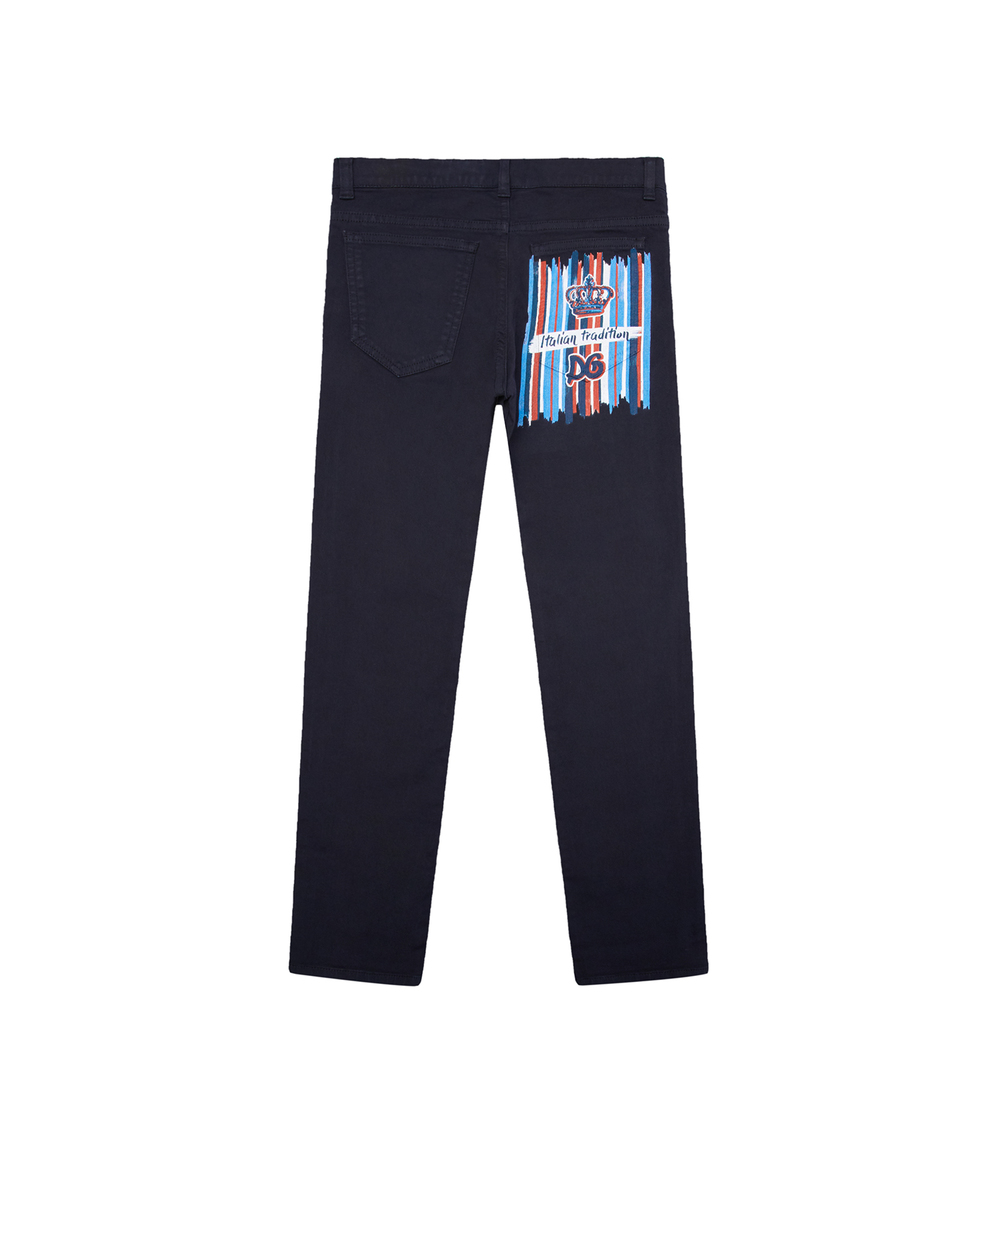 брюки Dolce&Gabbana Kids L42F04-LY044-S, синий цвет • Купить в интернет-магазине Kameron